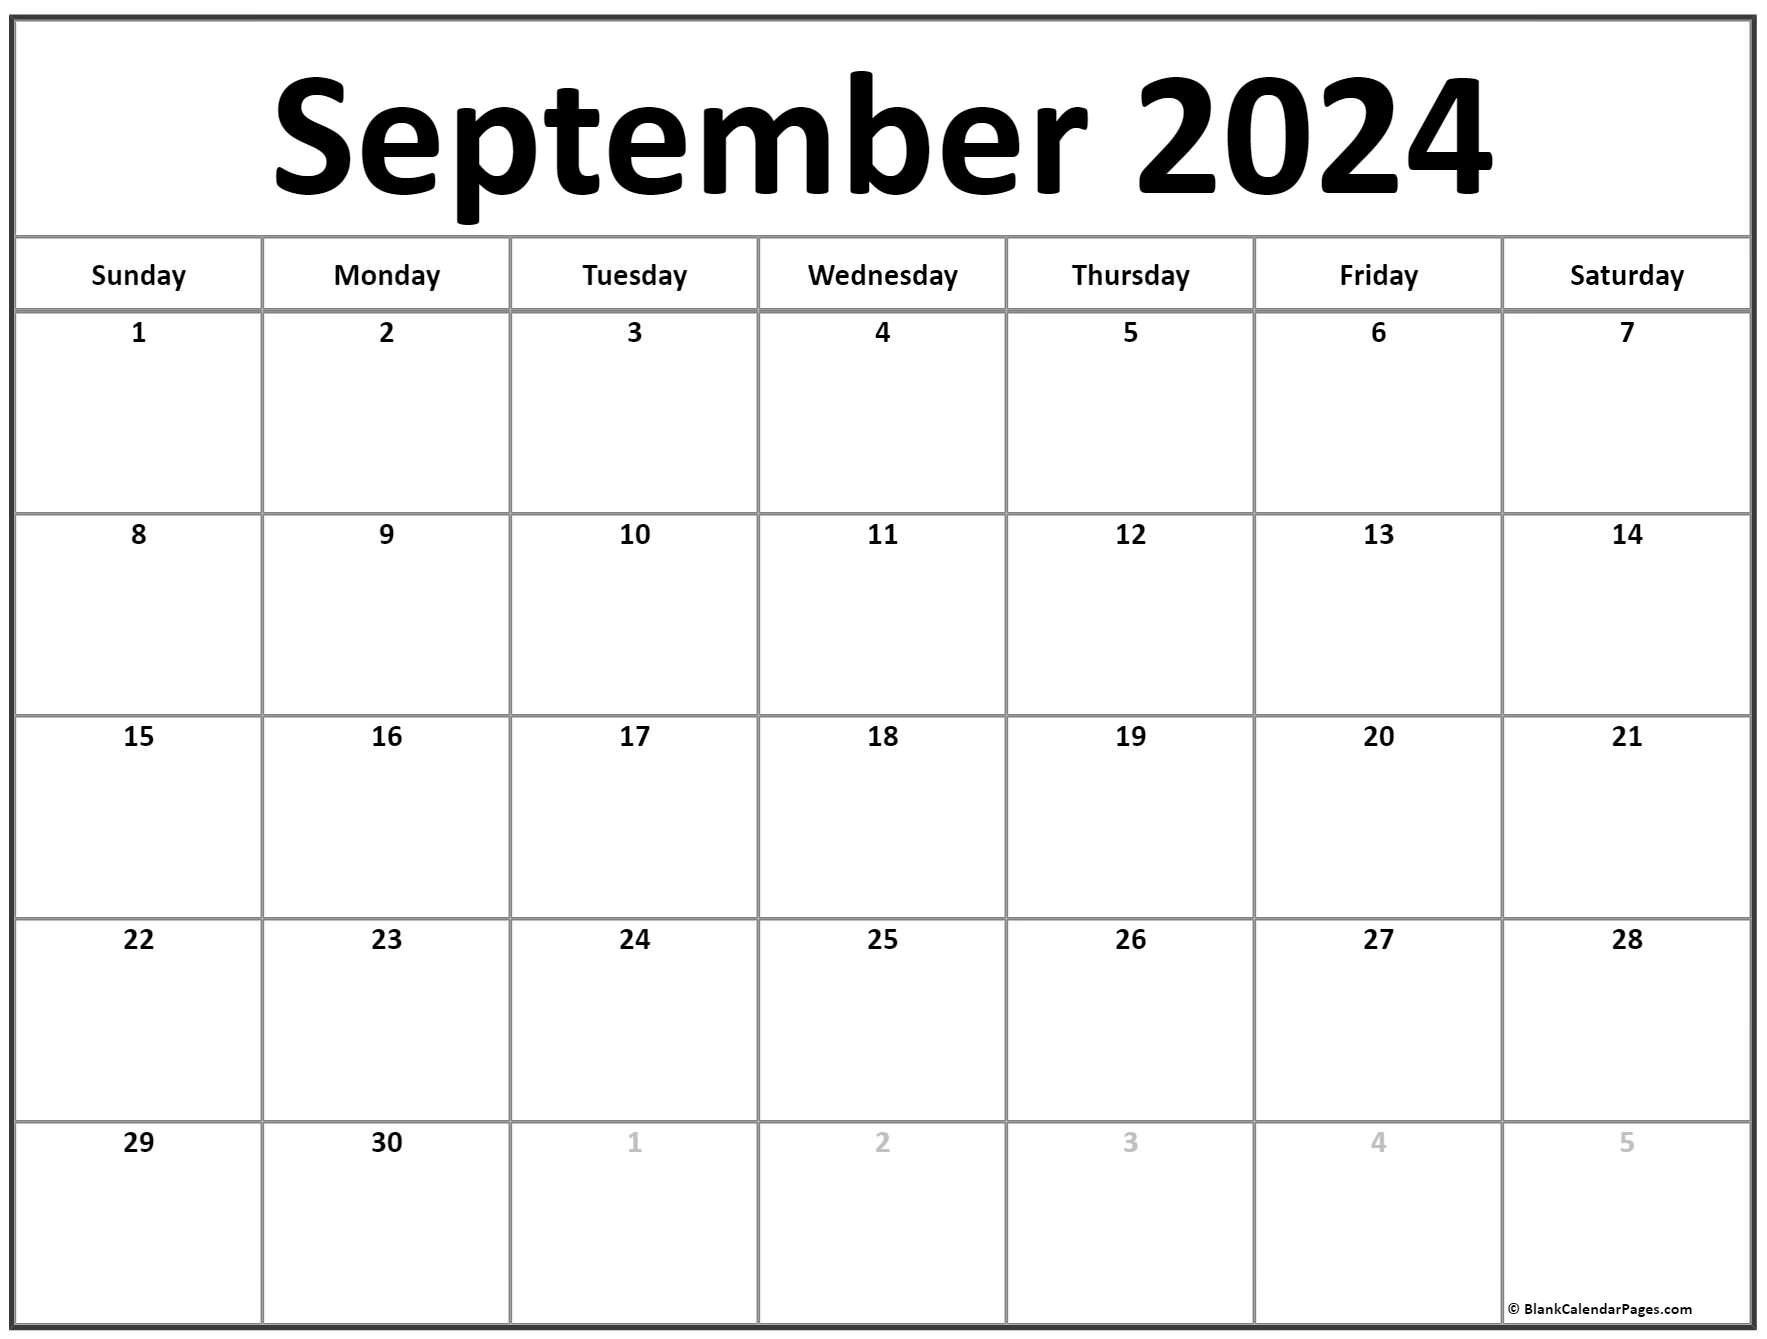 September 2022 Calendar Printable September 2022 Calendar | Free Printable Calendar Templates